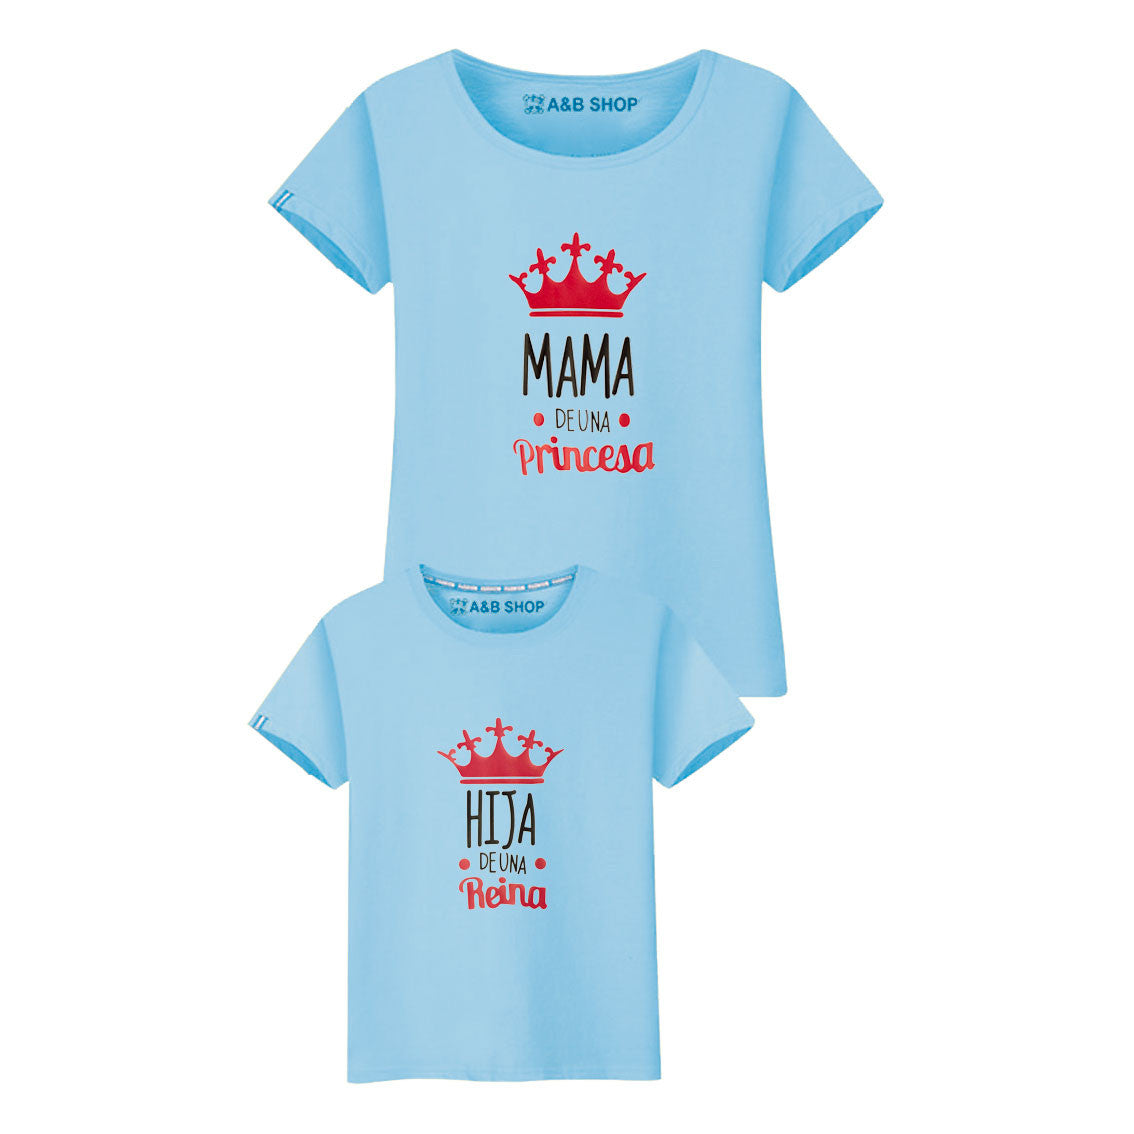 Camiseta Mamá de una Princesa-Hija de una Reina